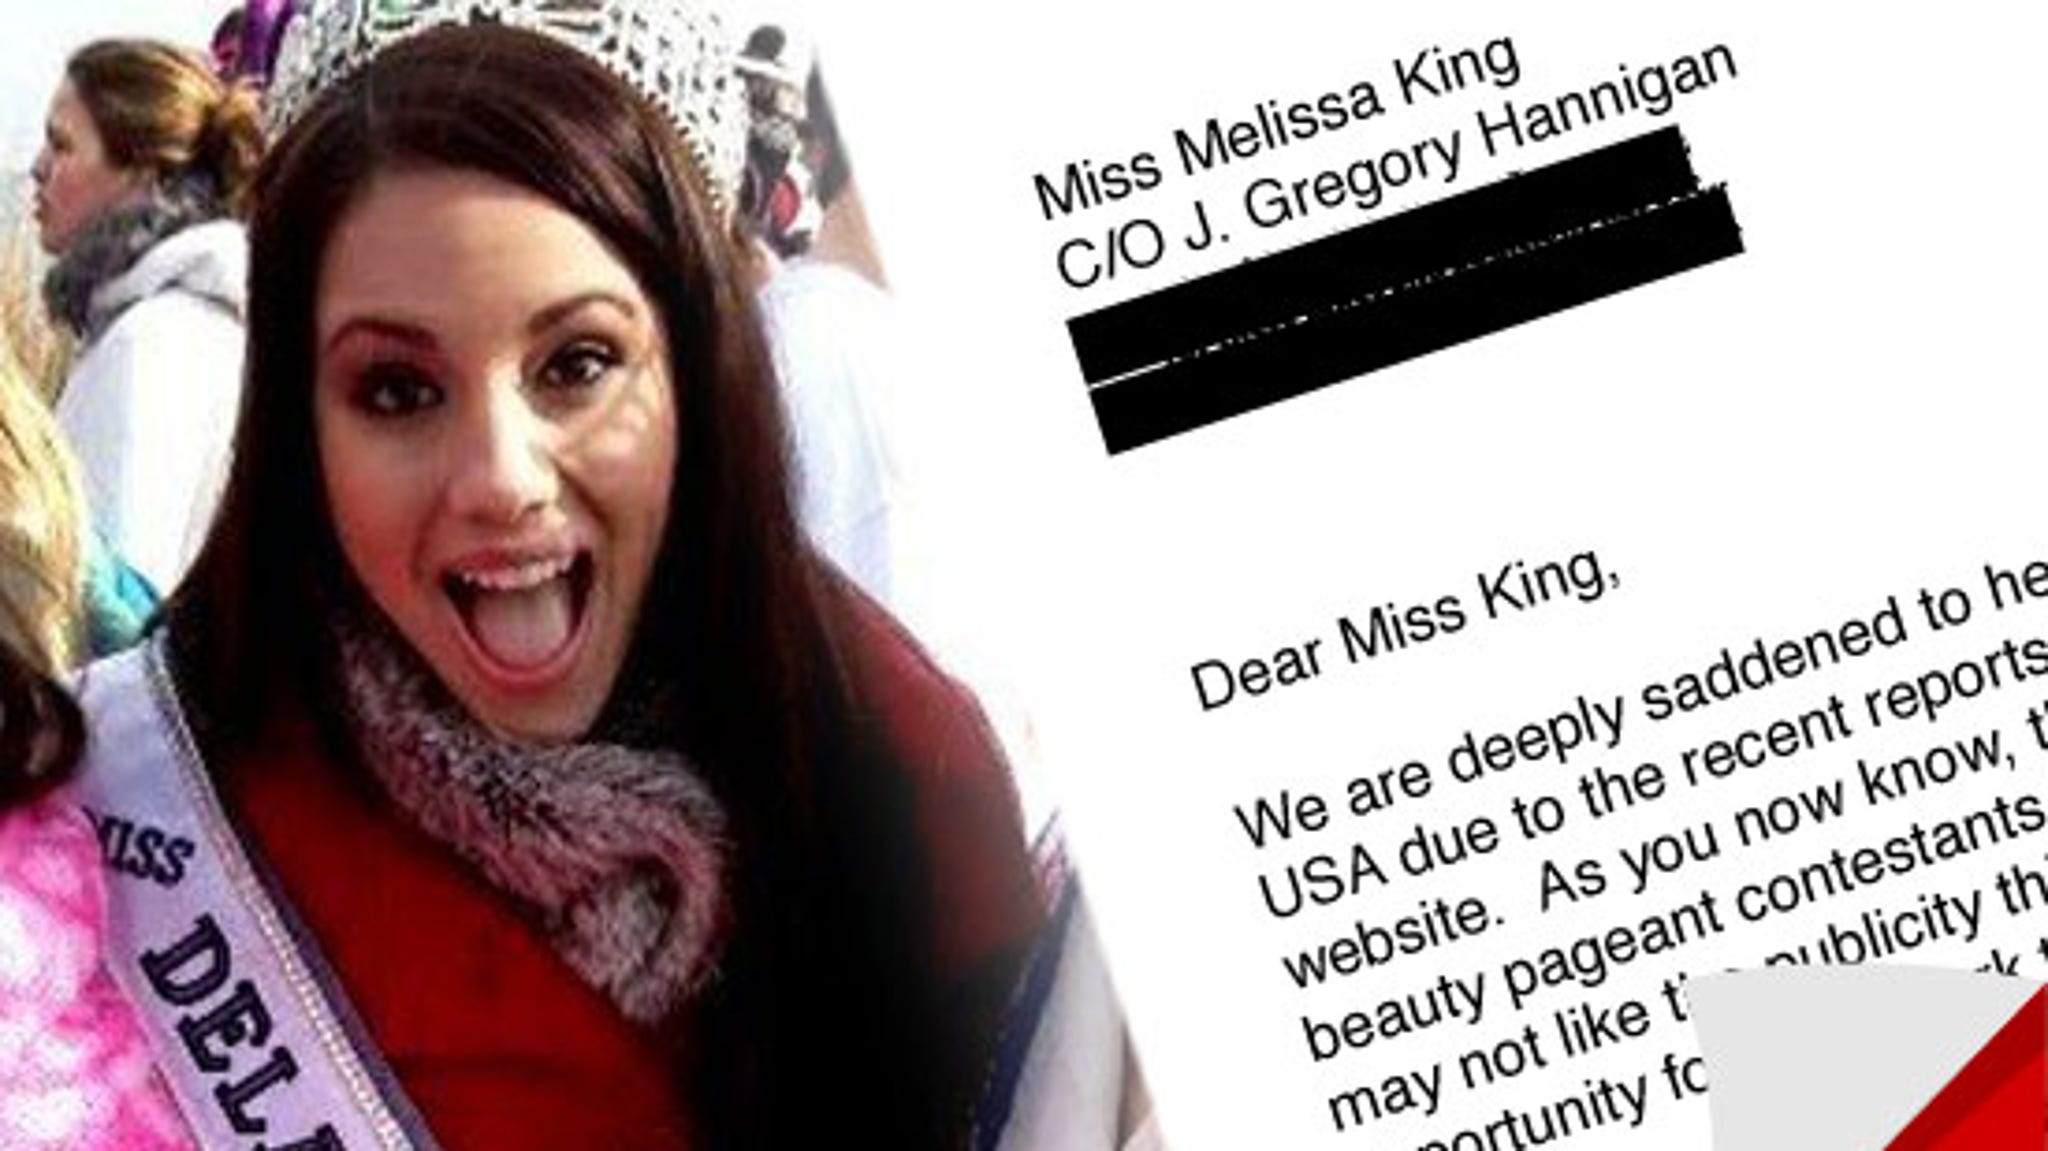 Melissa king